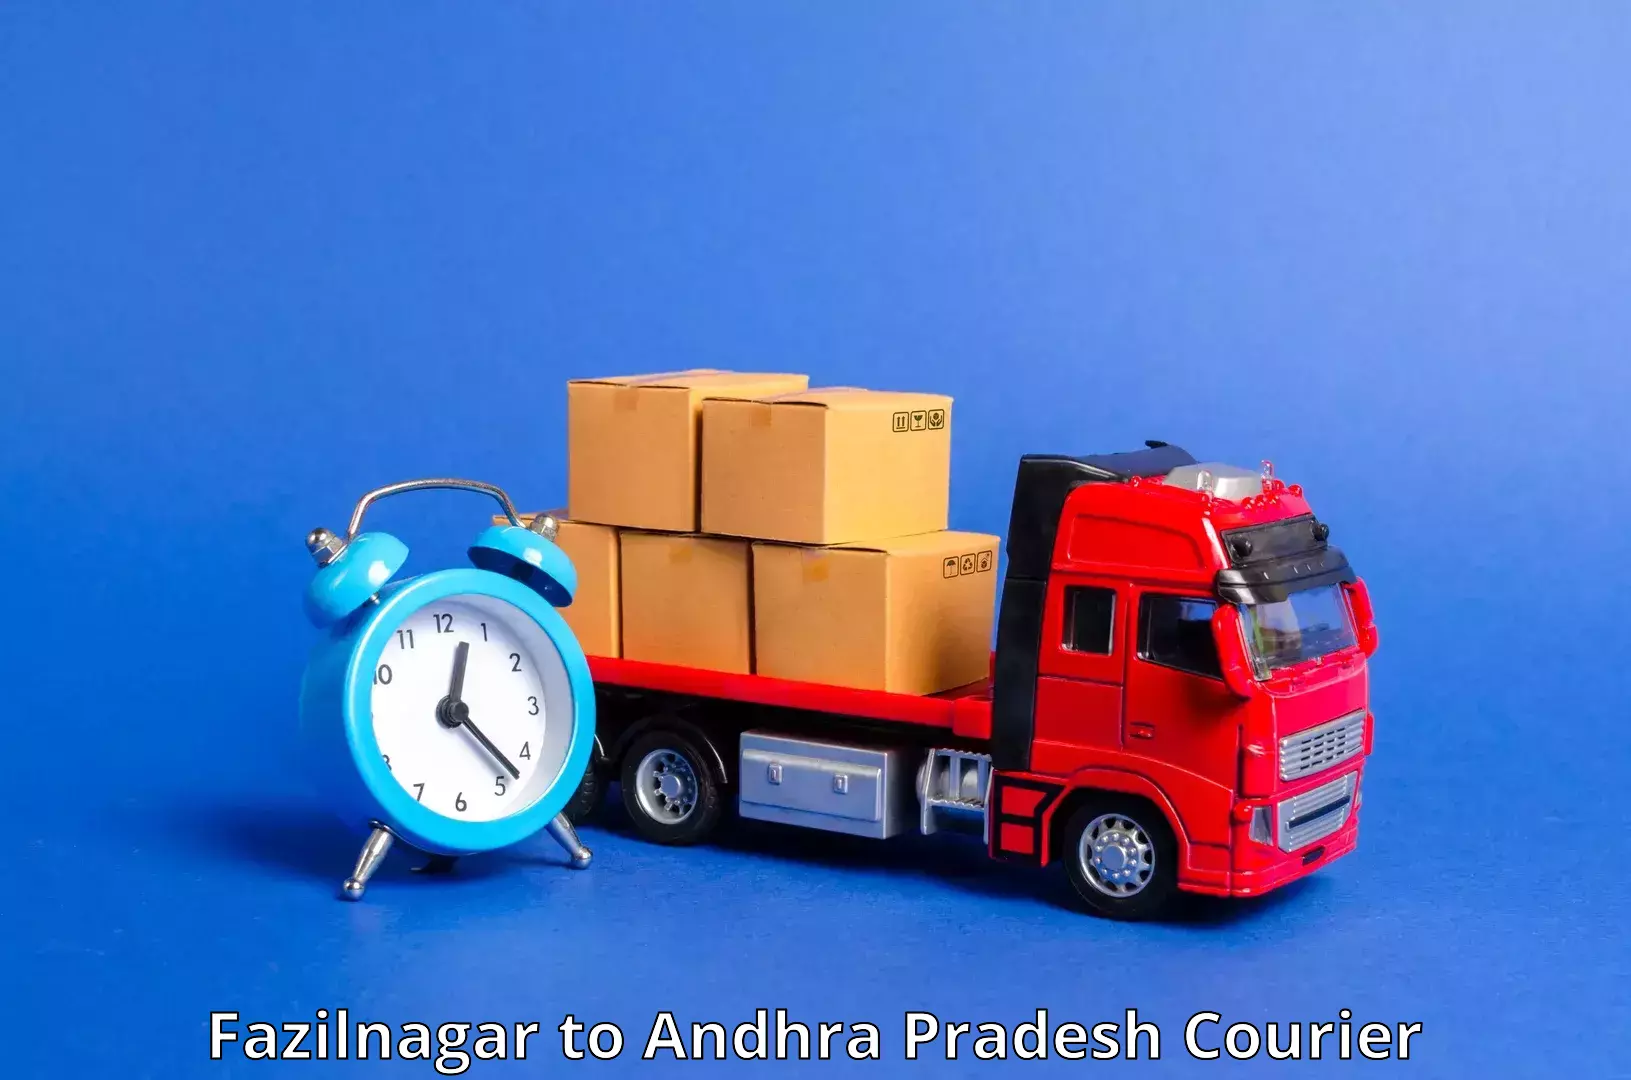 State-of-the-art courier technology Fazilnagar to Kakinada